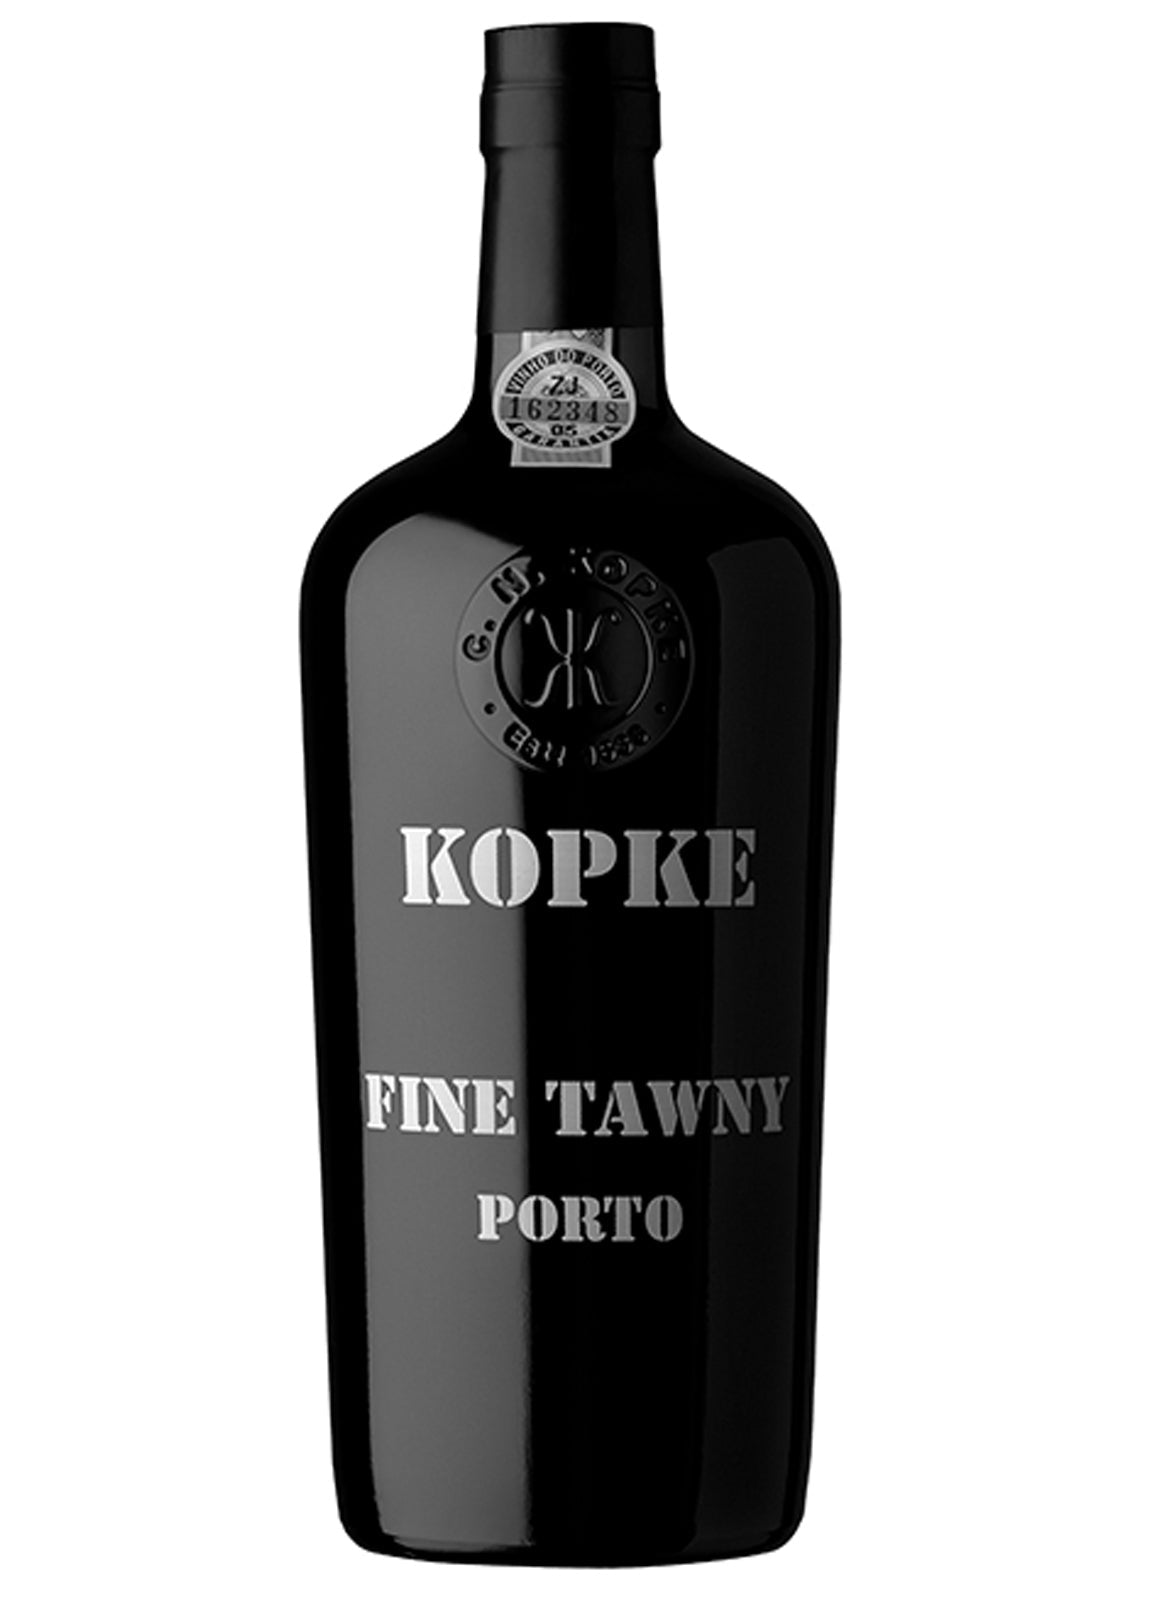 Vinho do Porto Fine Tawny Kopke